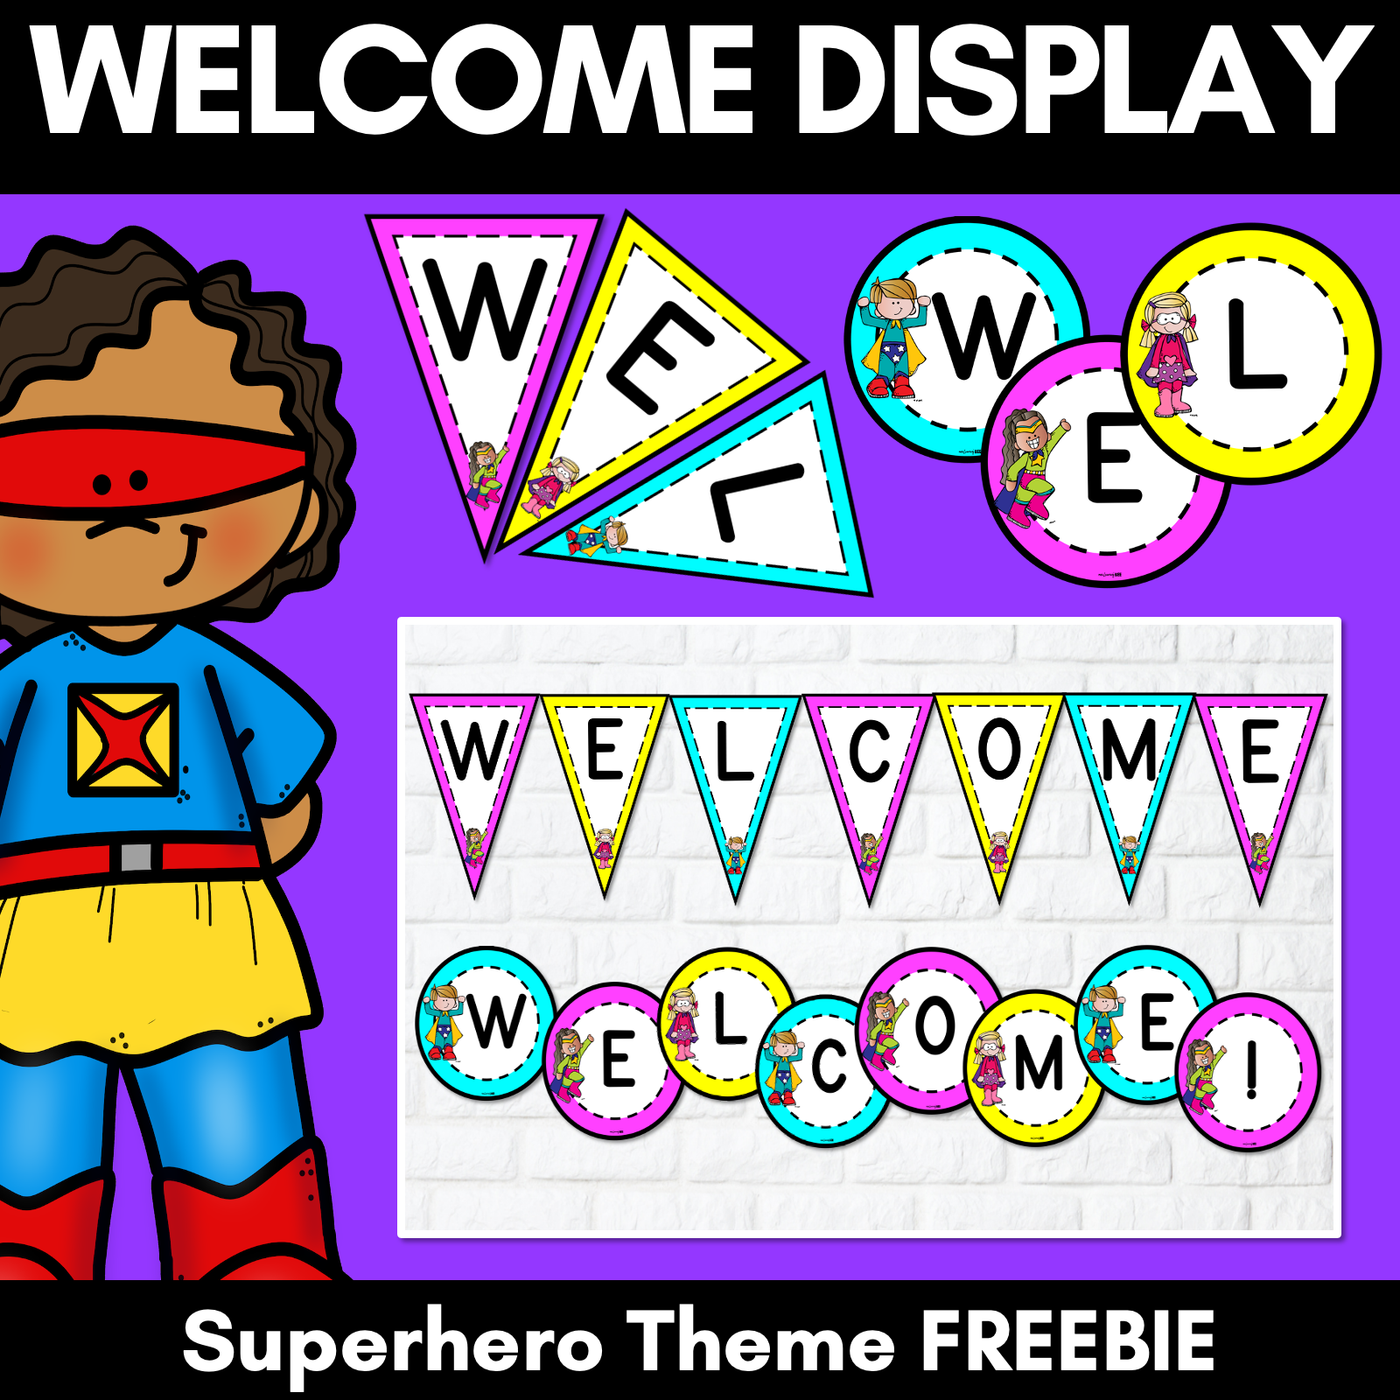 SUPERHERO THEME Welcome Display